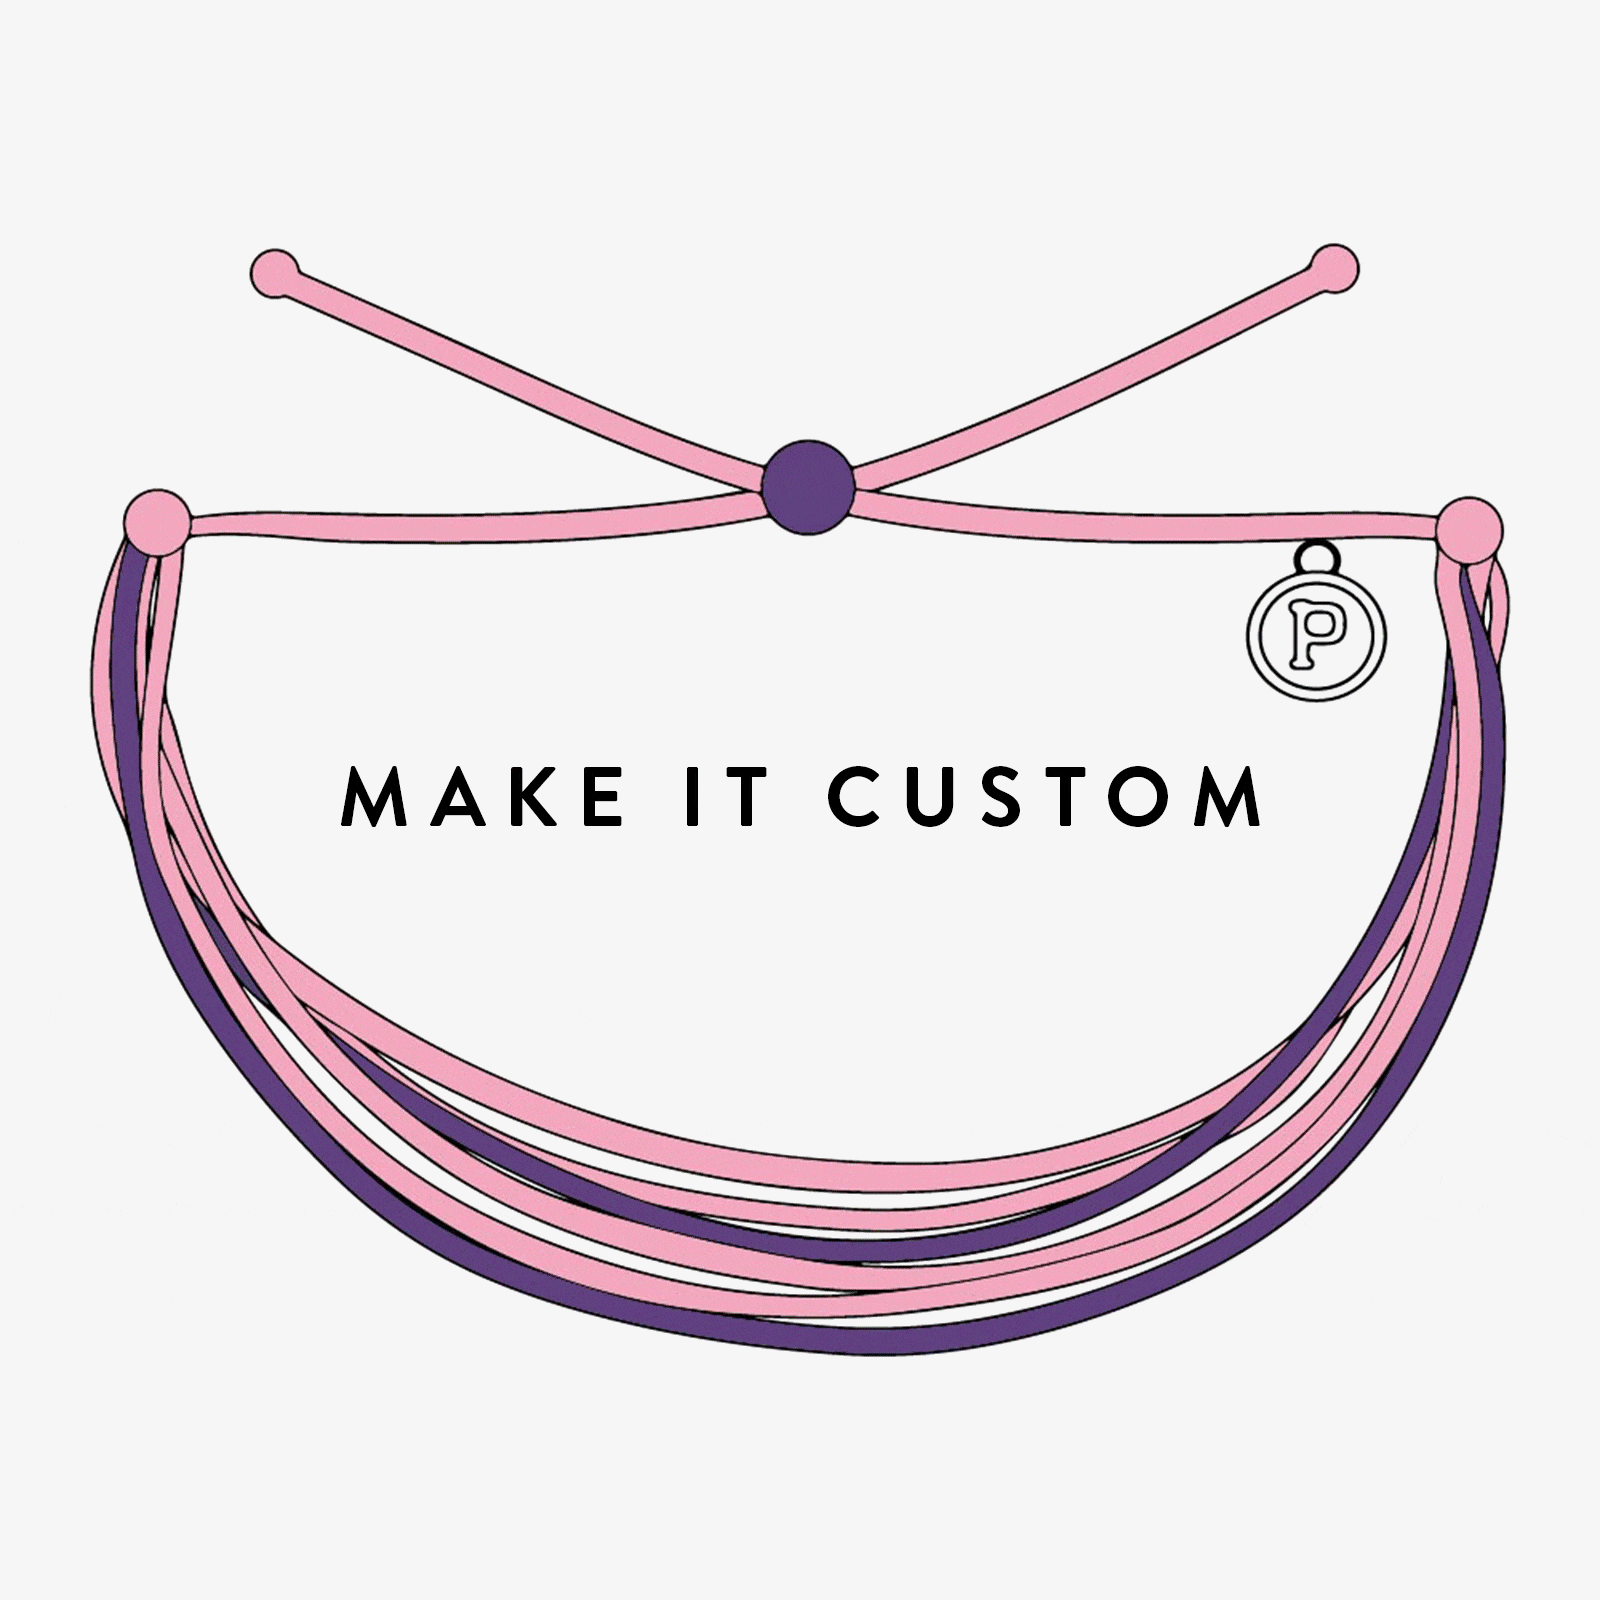 Custom Friendship Bracelets Bulk Order Form Wholesale 